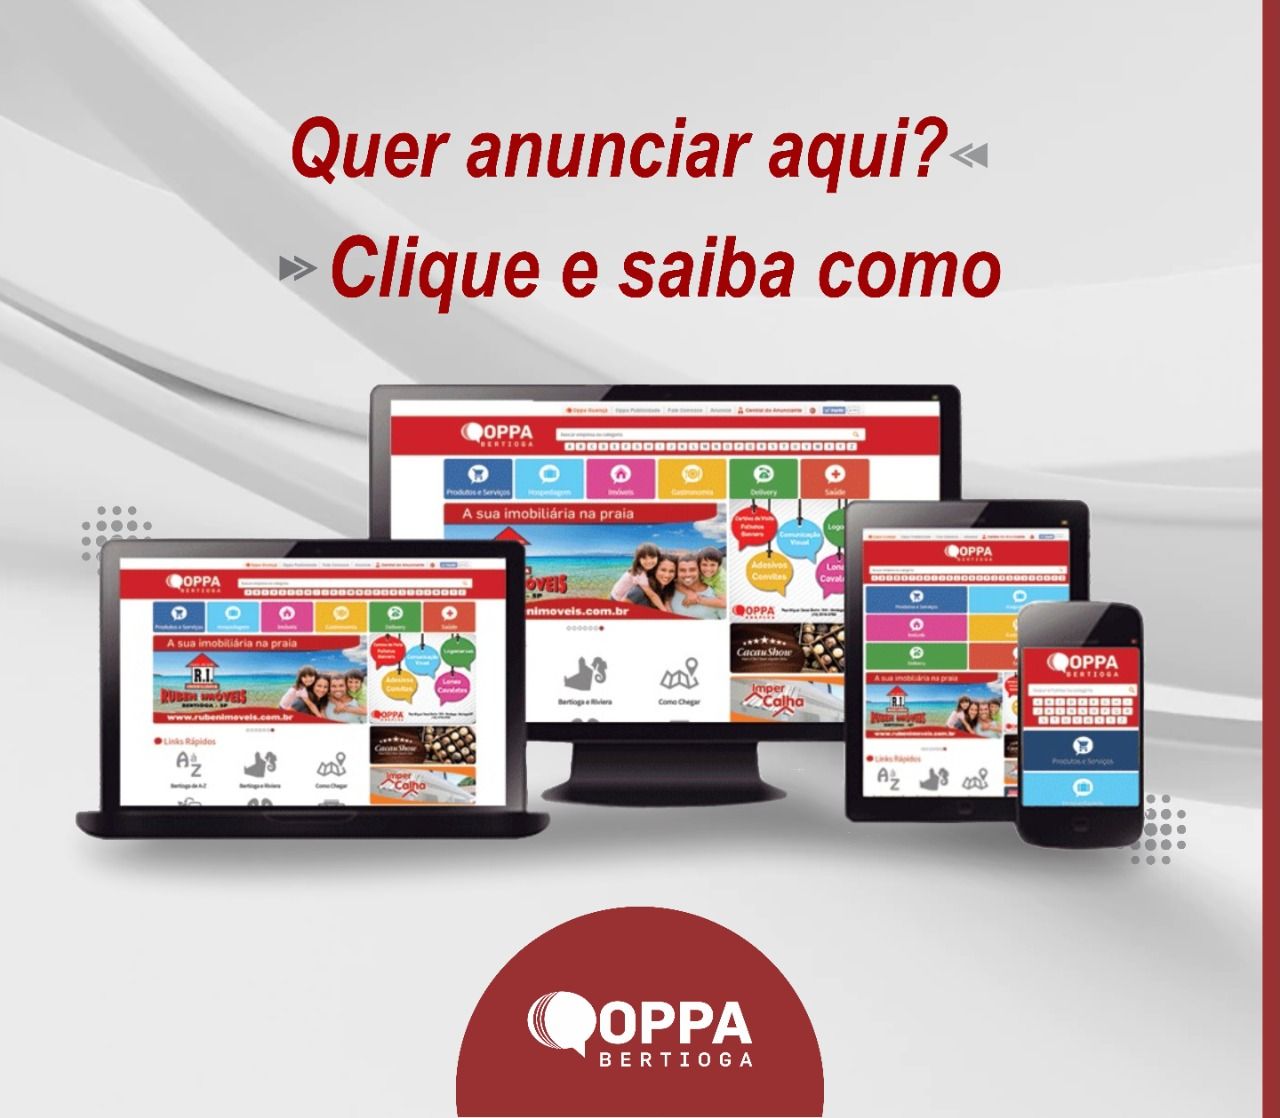 Oppa - anuncie